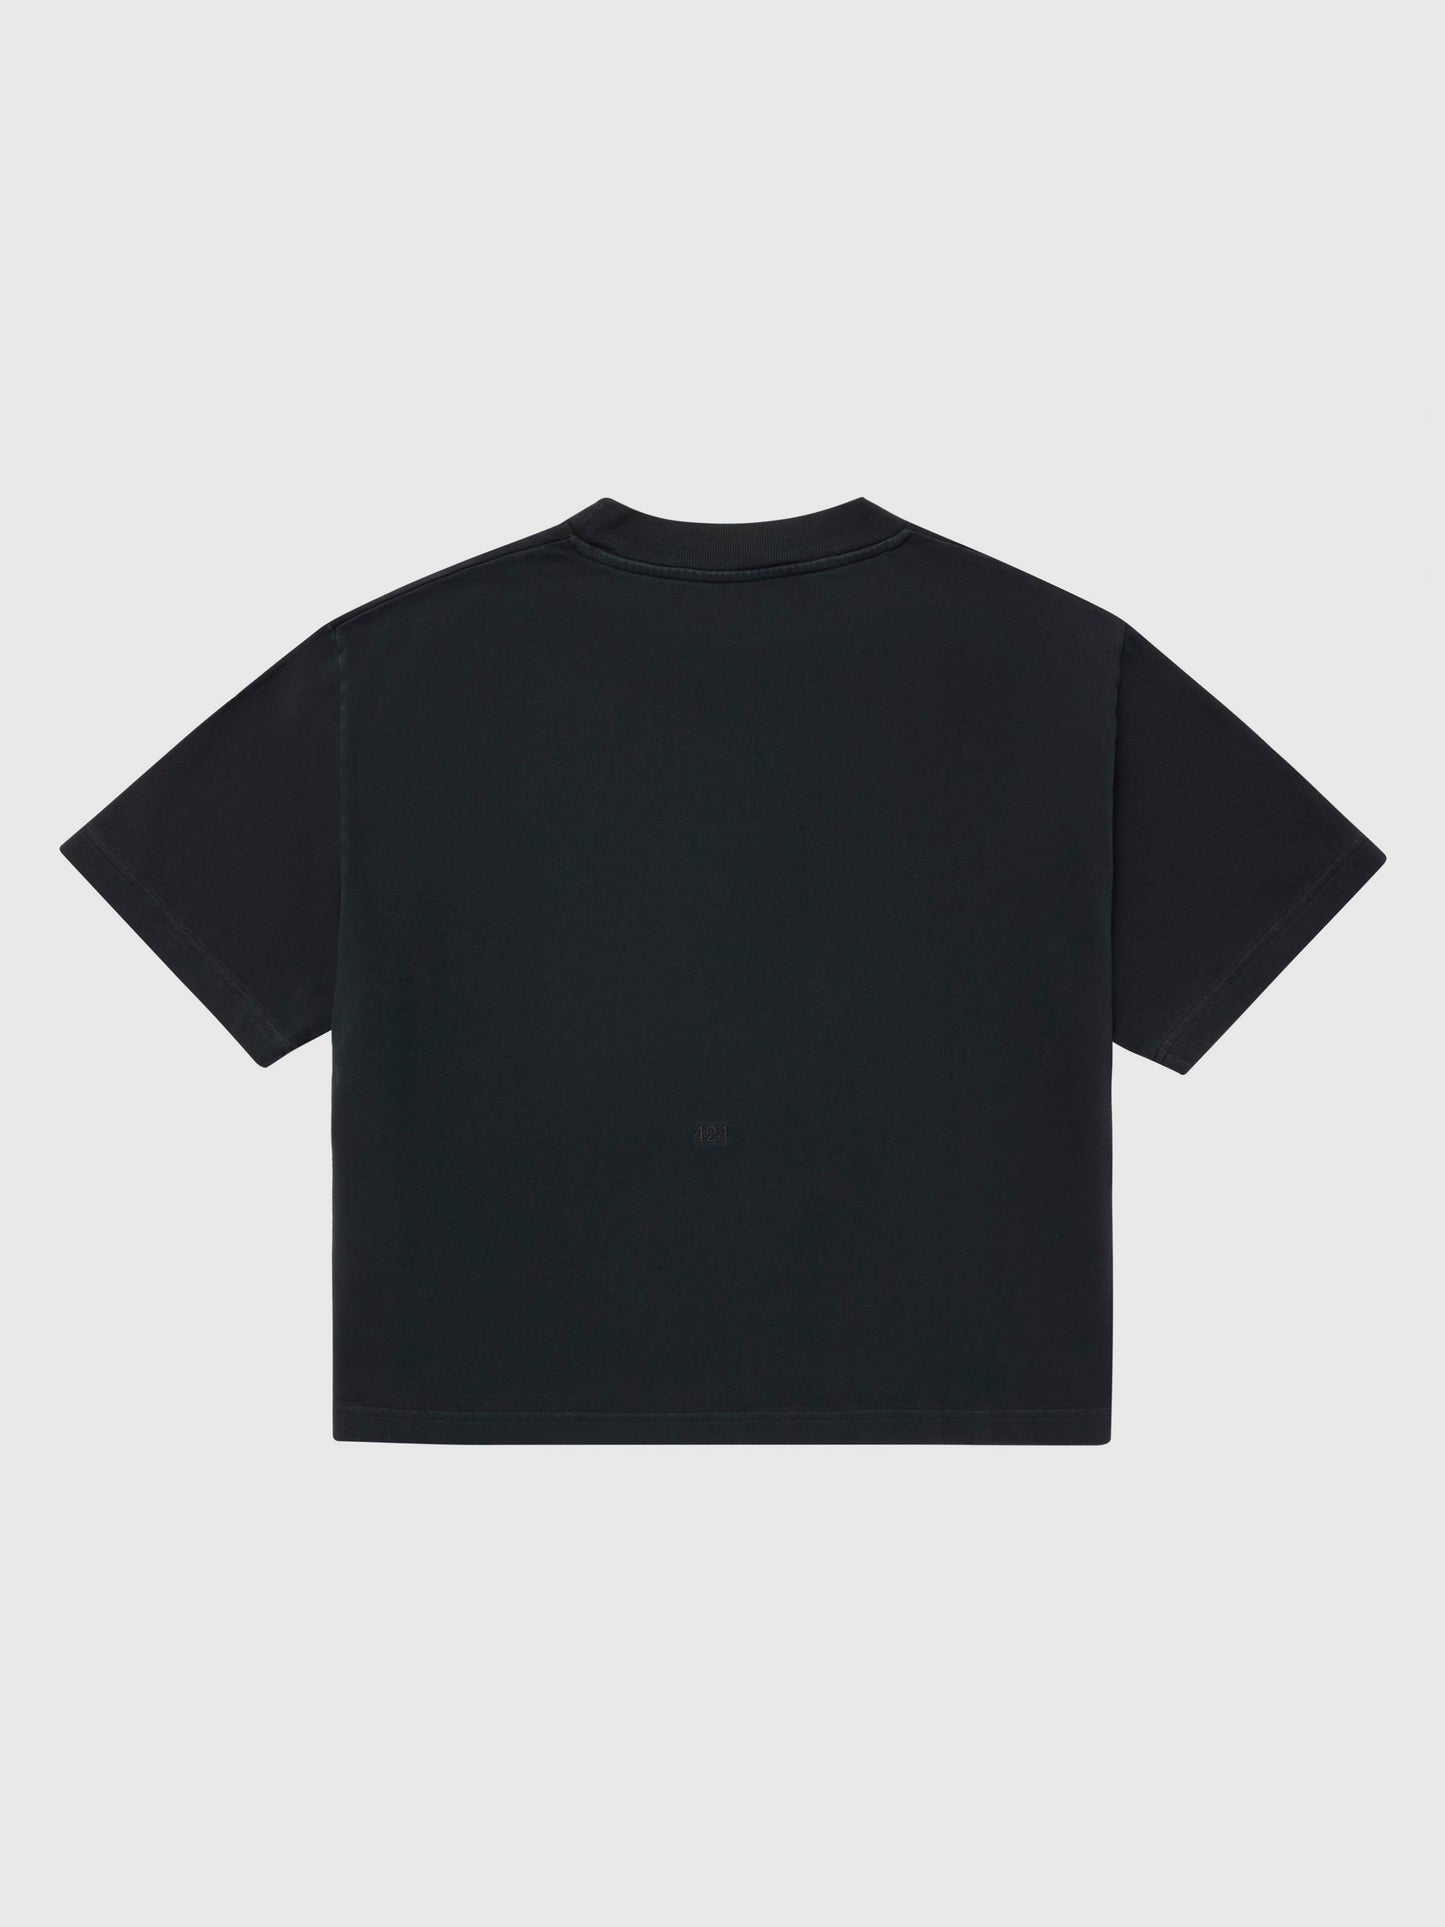 Cropped Alias T-Shirt in Black